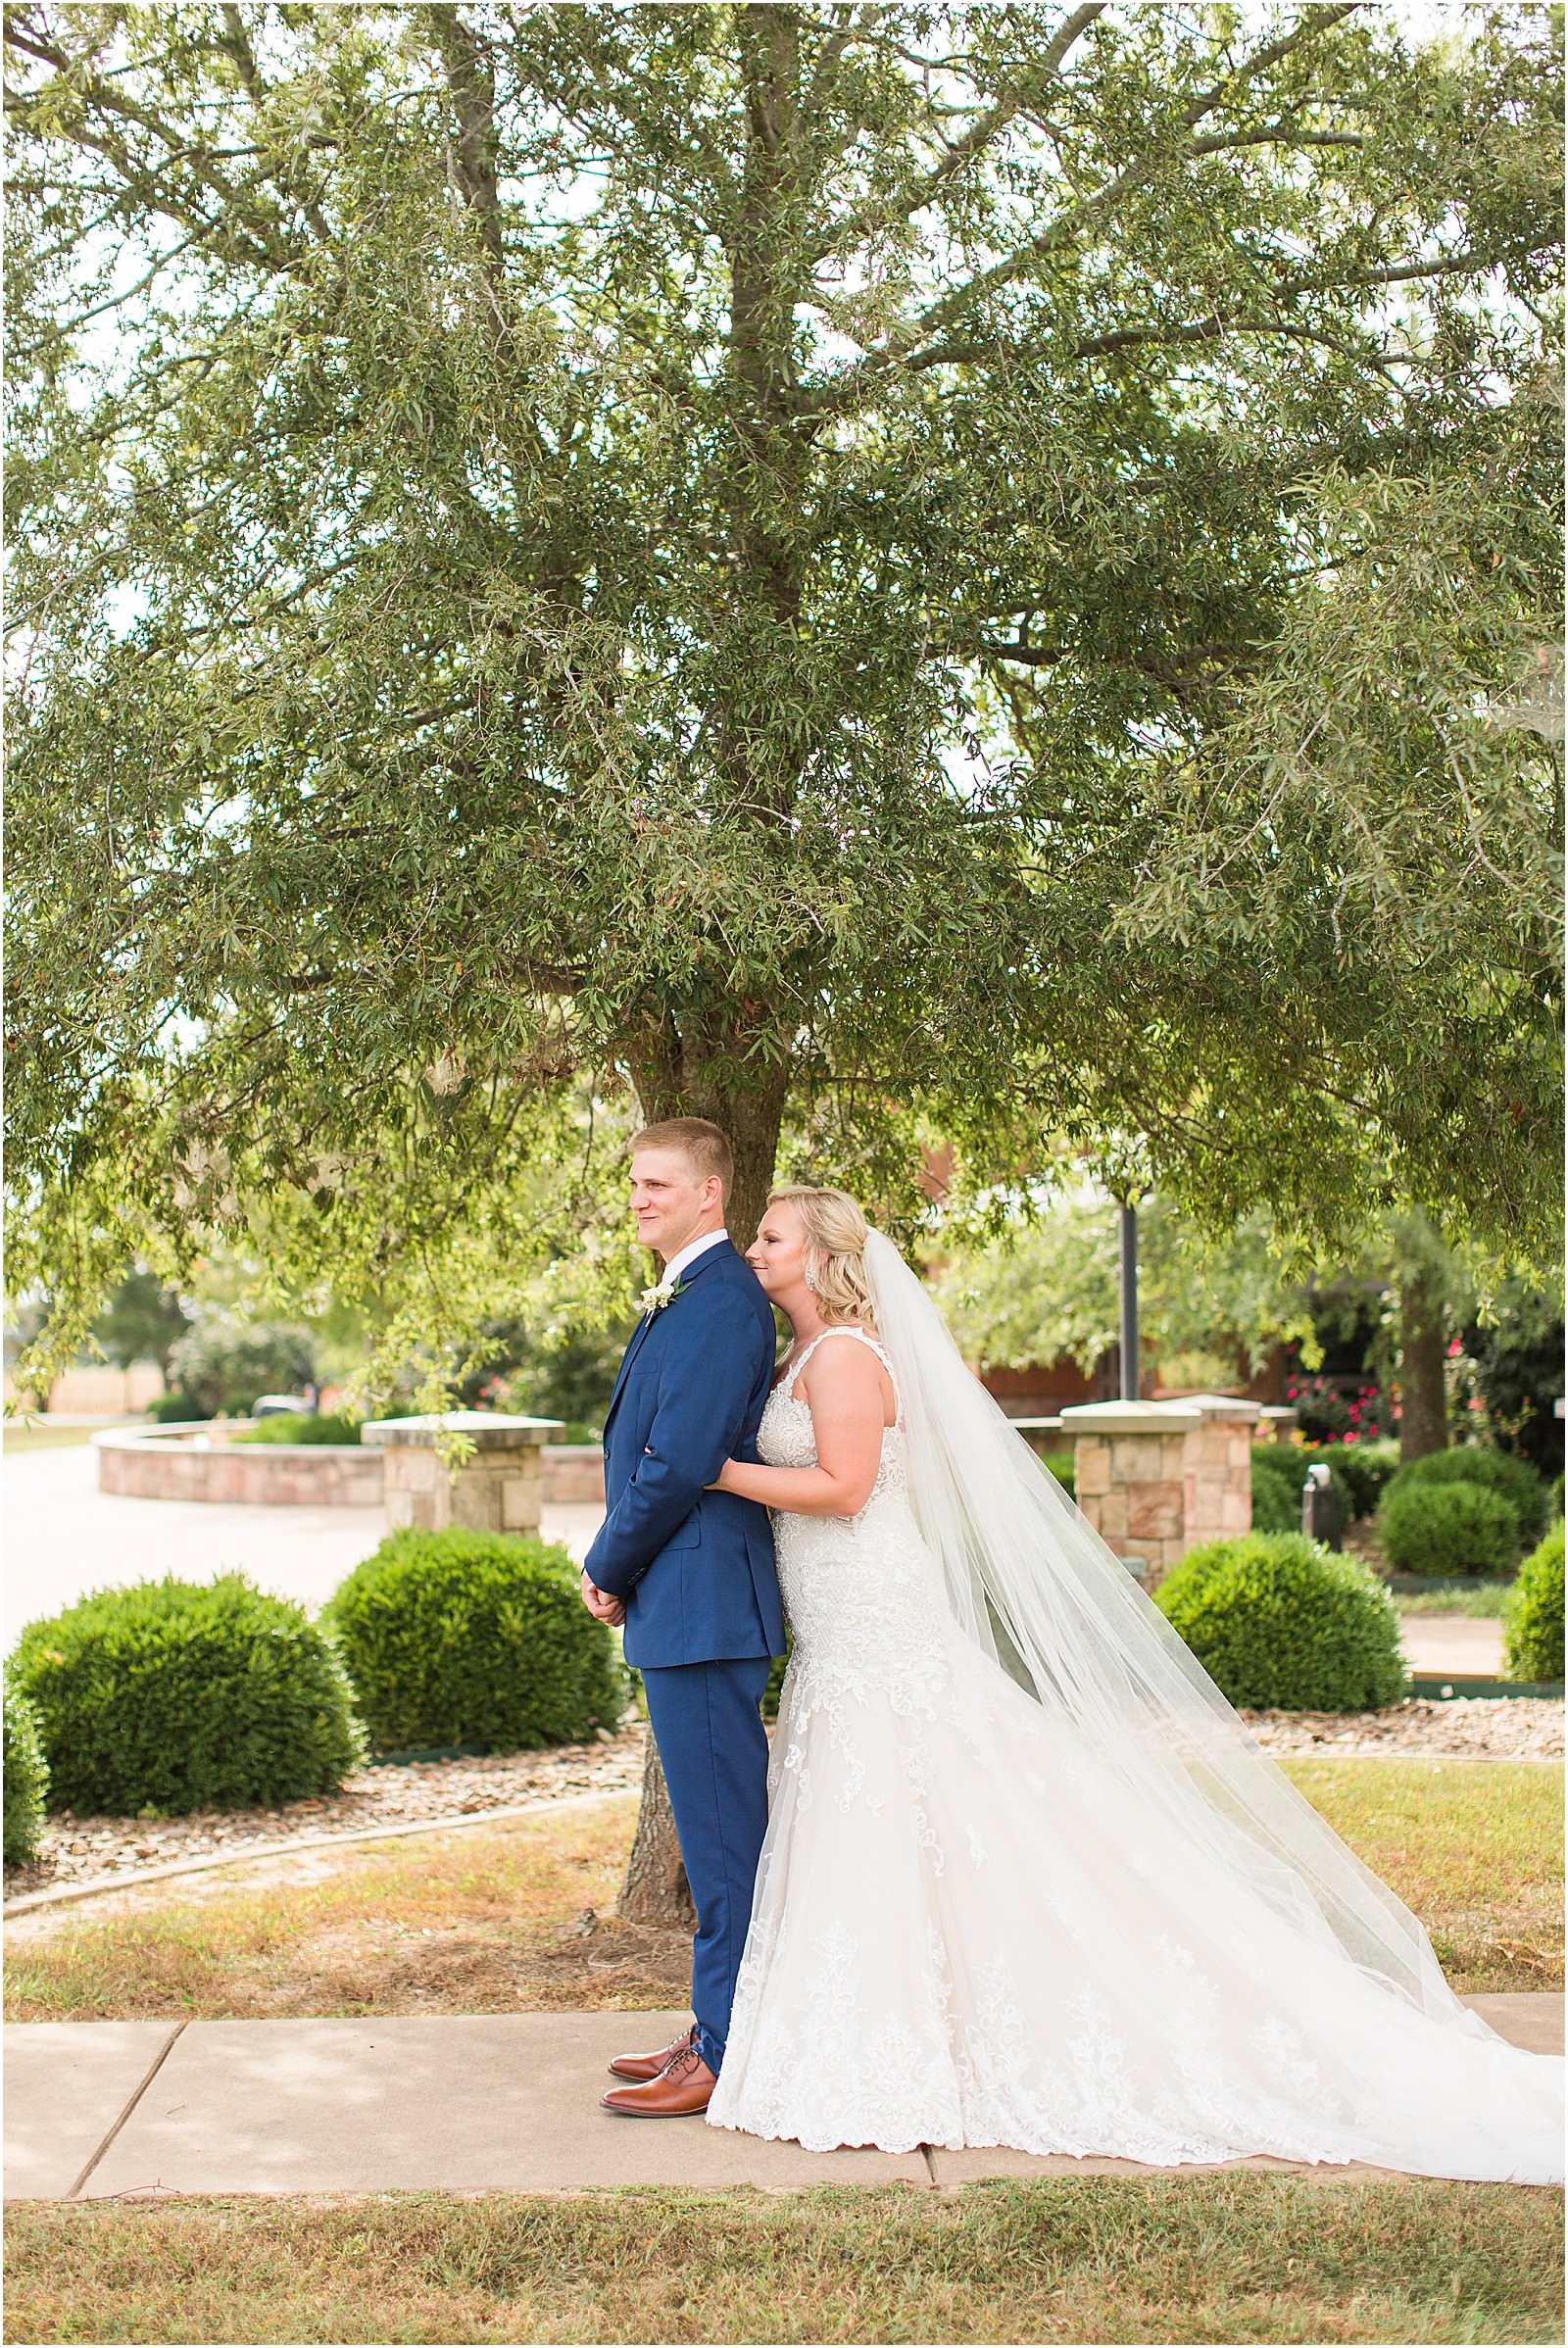 Kelsey and Caleb | Walkers Bluff Winery Wedding | Bret and Brandie Photography033.jpg